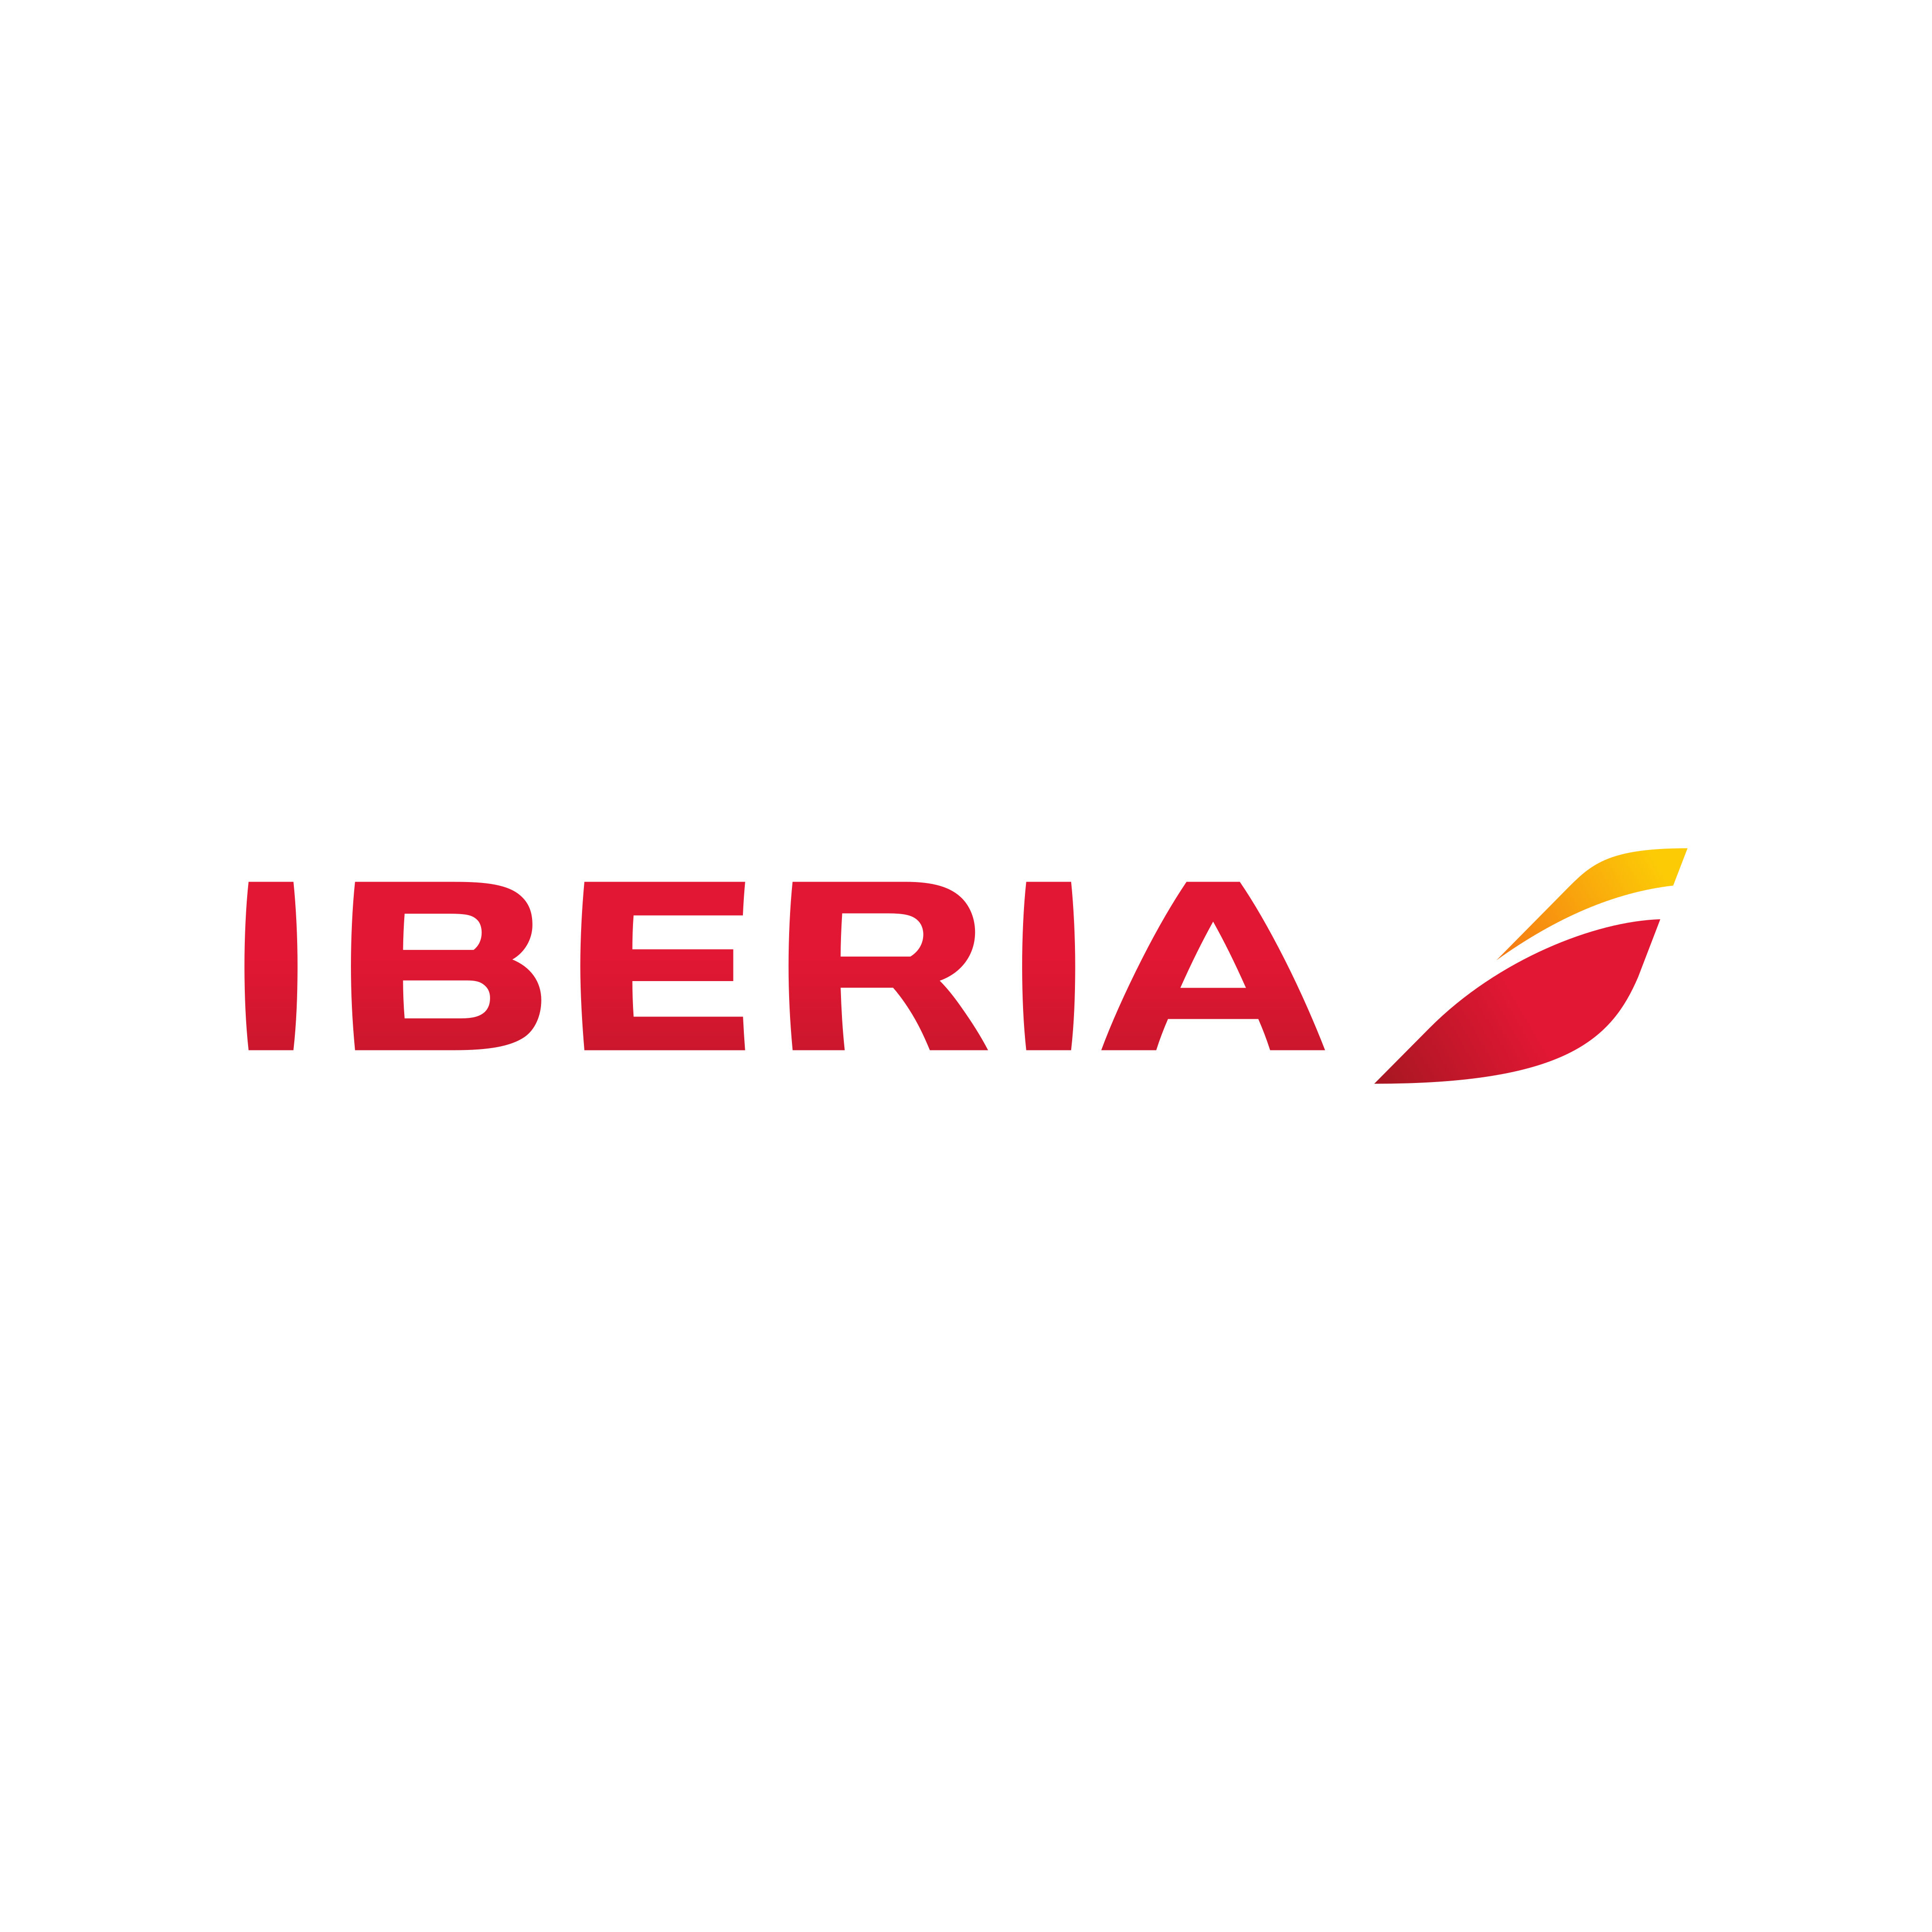 iberia logo 0 - Iberia Logo